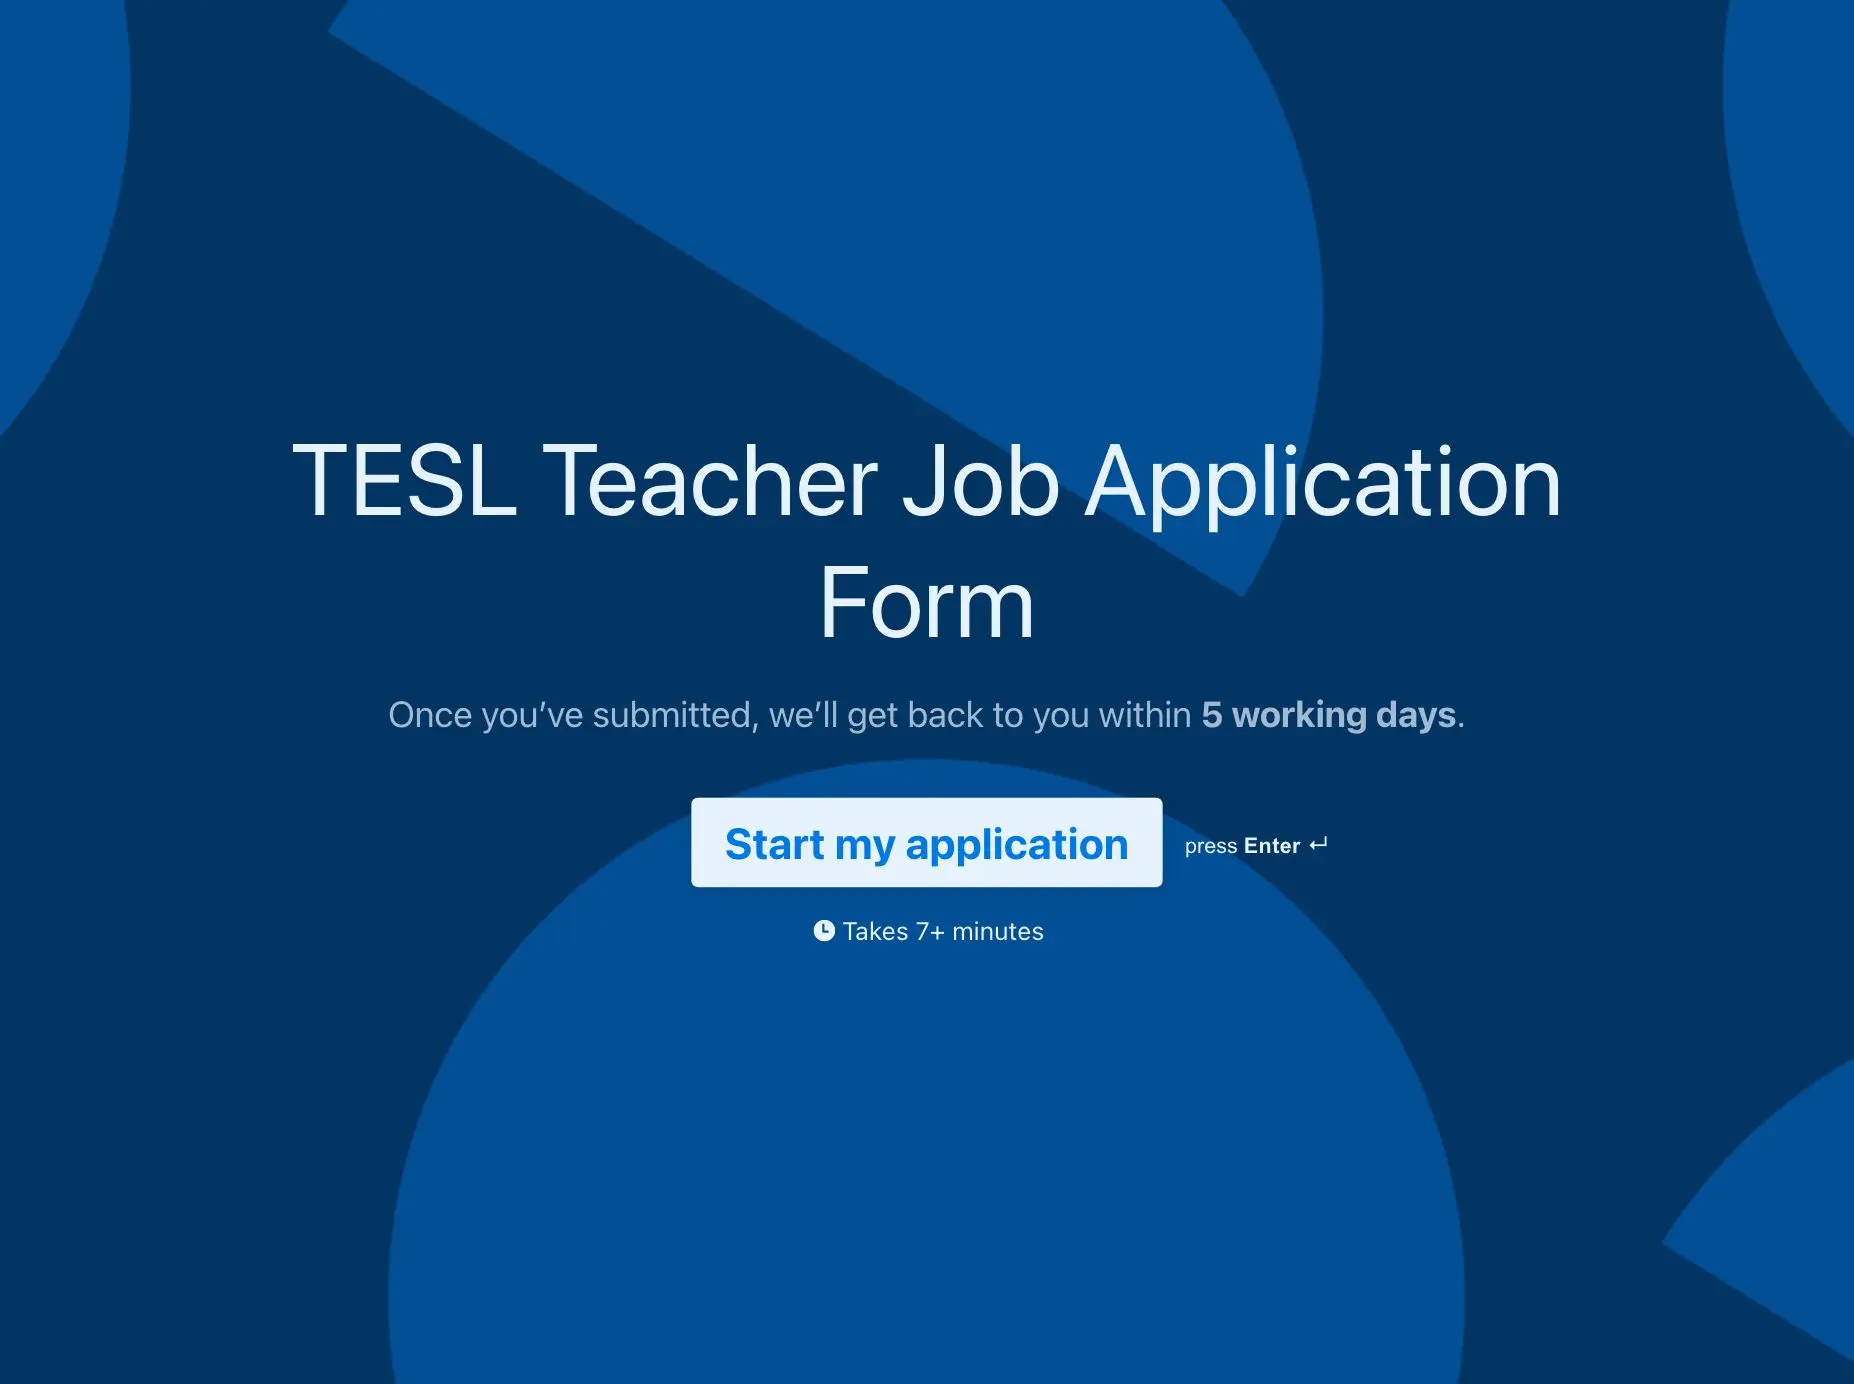 TESL Teacher Job Application Form Template Hero